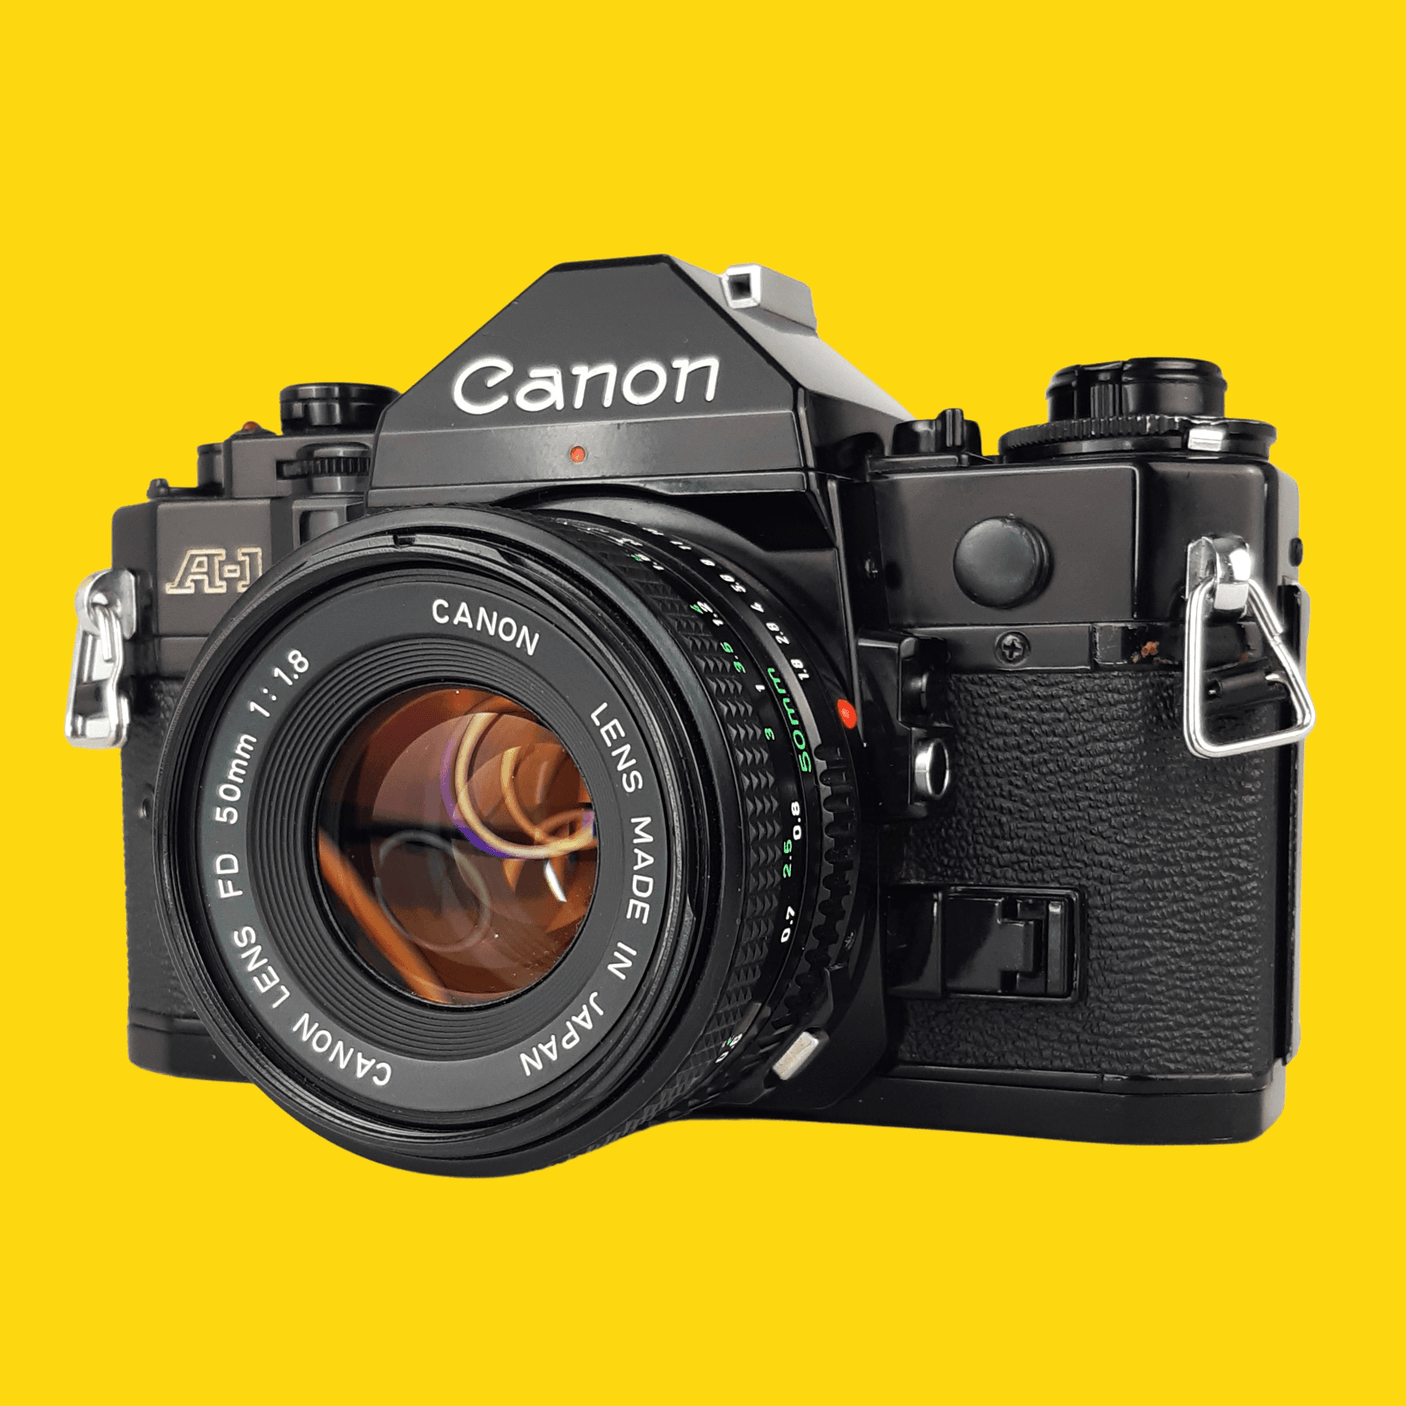 Canon フィルムカメラ A-1 レンズ FD 50mm 1:1.4 - www.stedile.com.br